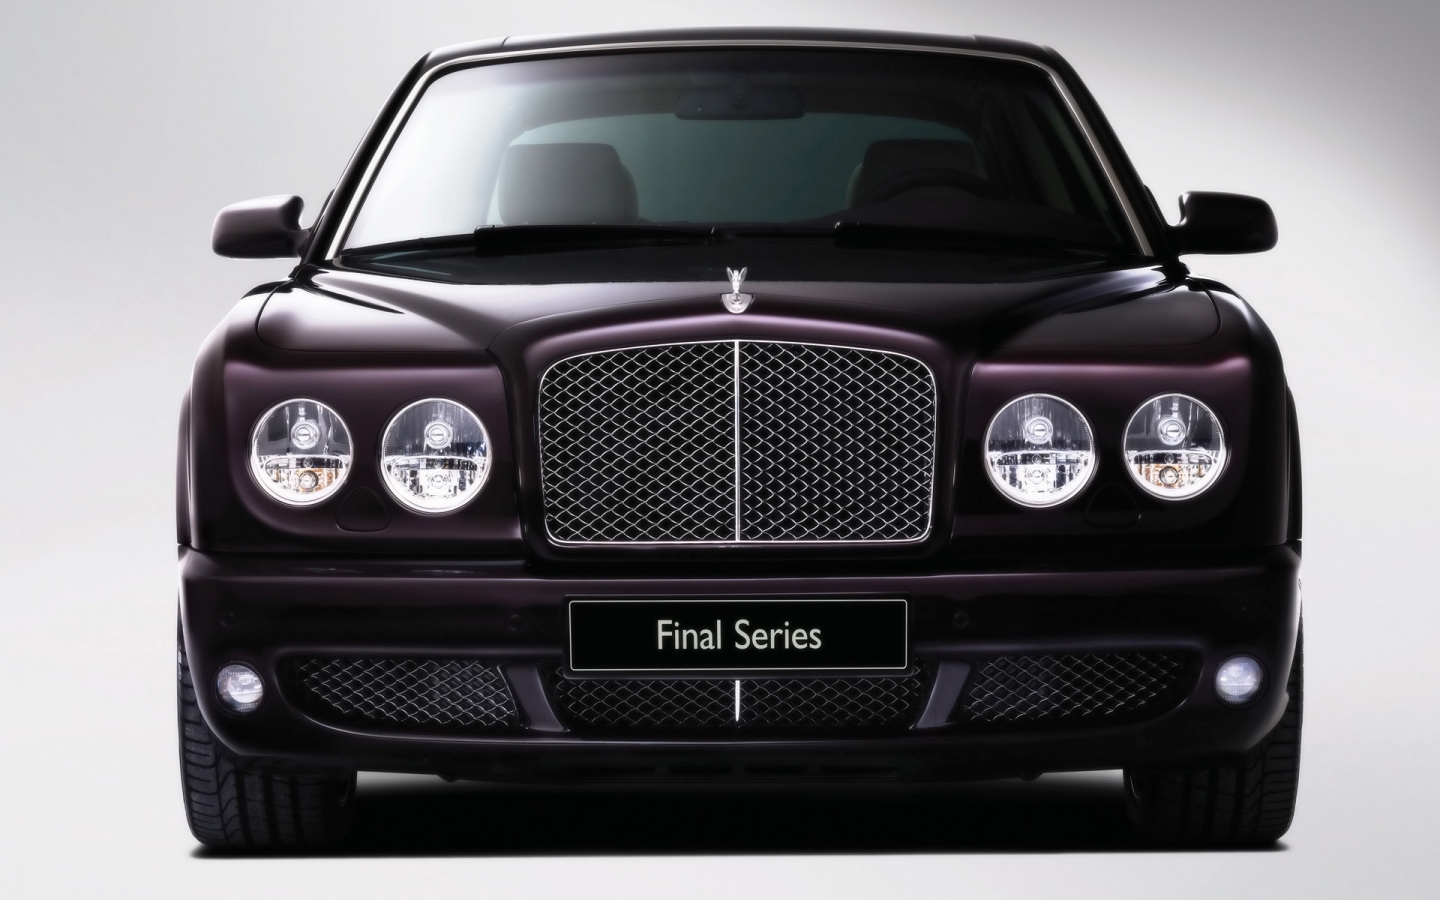 Bentley Arnage Final Series 2009 for 1440 x 900 widescreen resolution